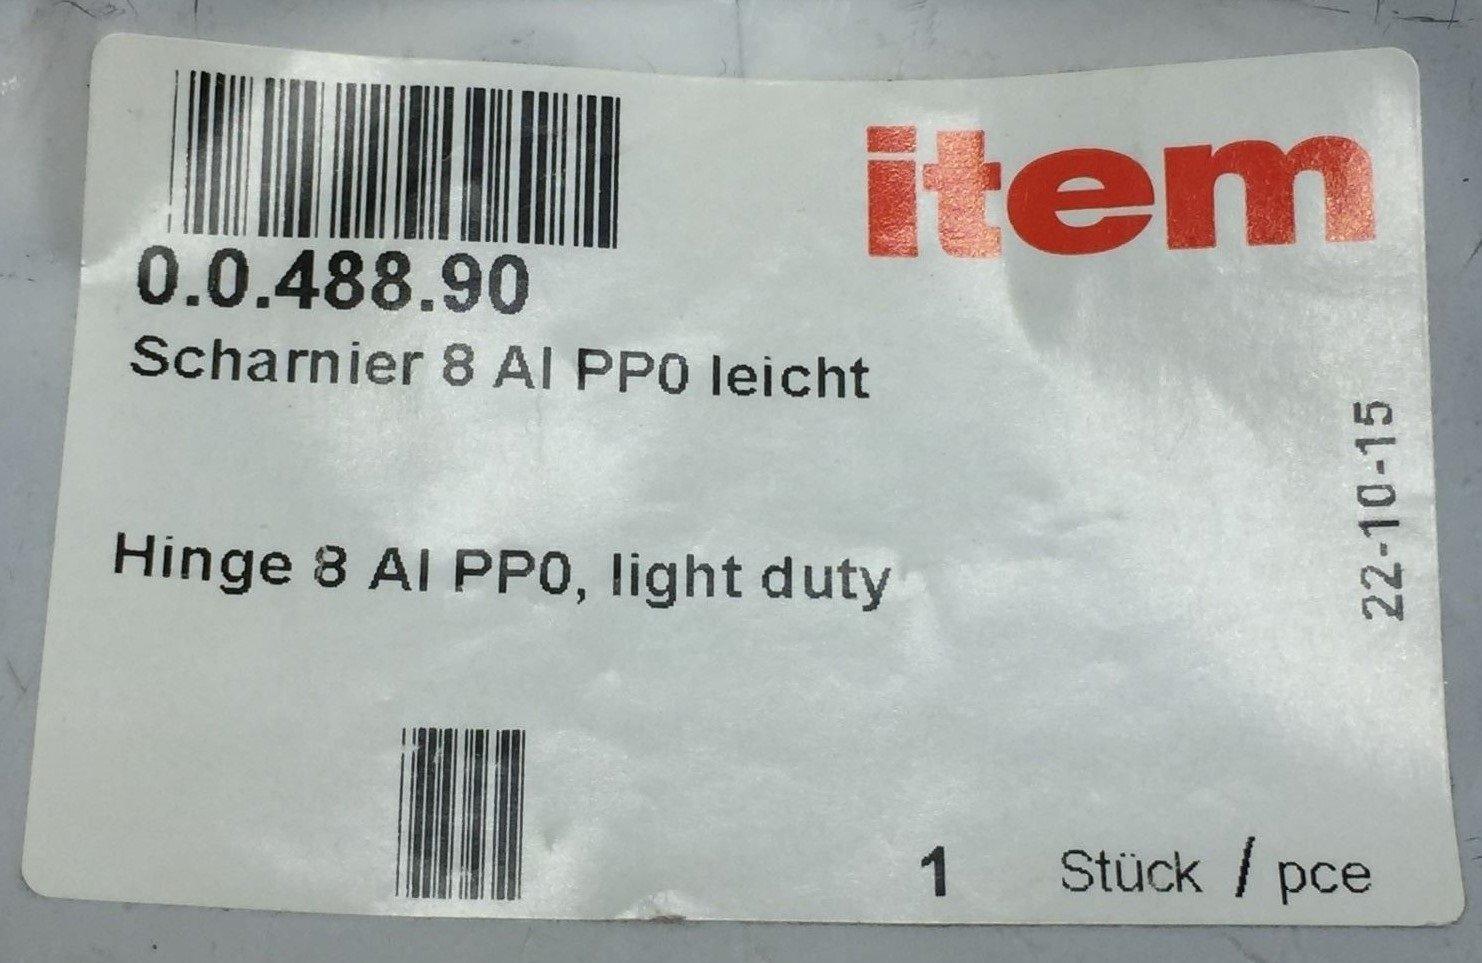 NEW ITEM 0.0.488.90 HINGE B Al PP0 LIGHT DUTY 